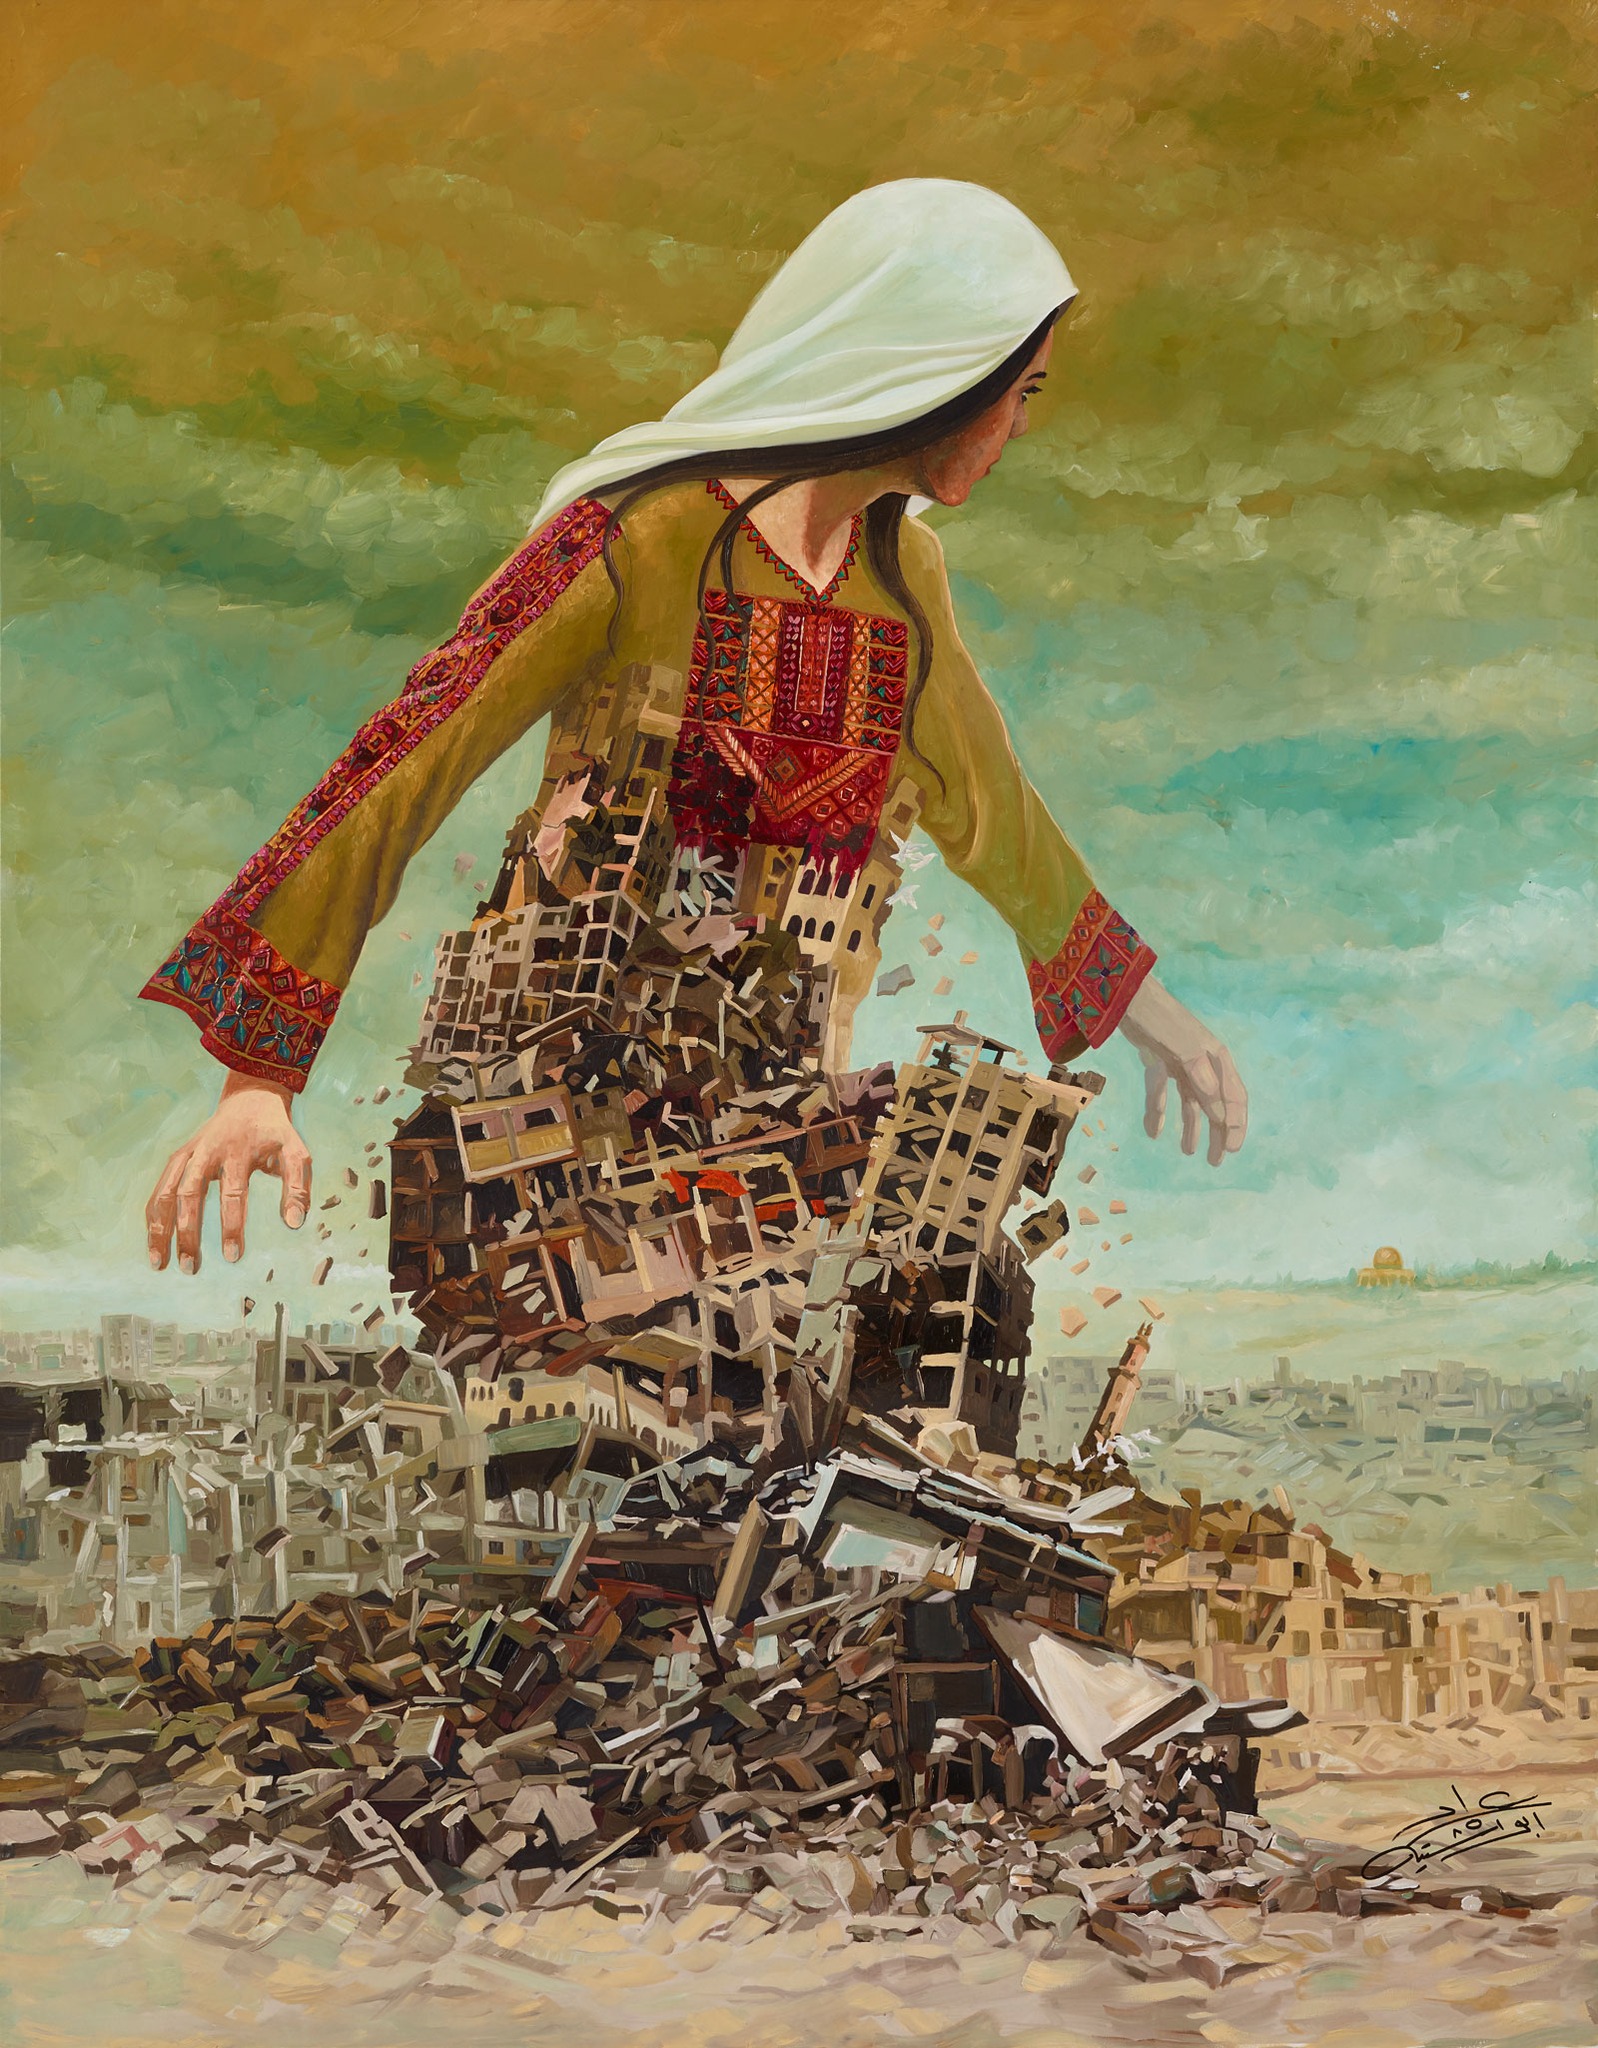 Imad Abu Shtayyah, Palestine (1965) We shall return, 2014 Medium: Oil on canvas 182 x 142 cm